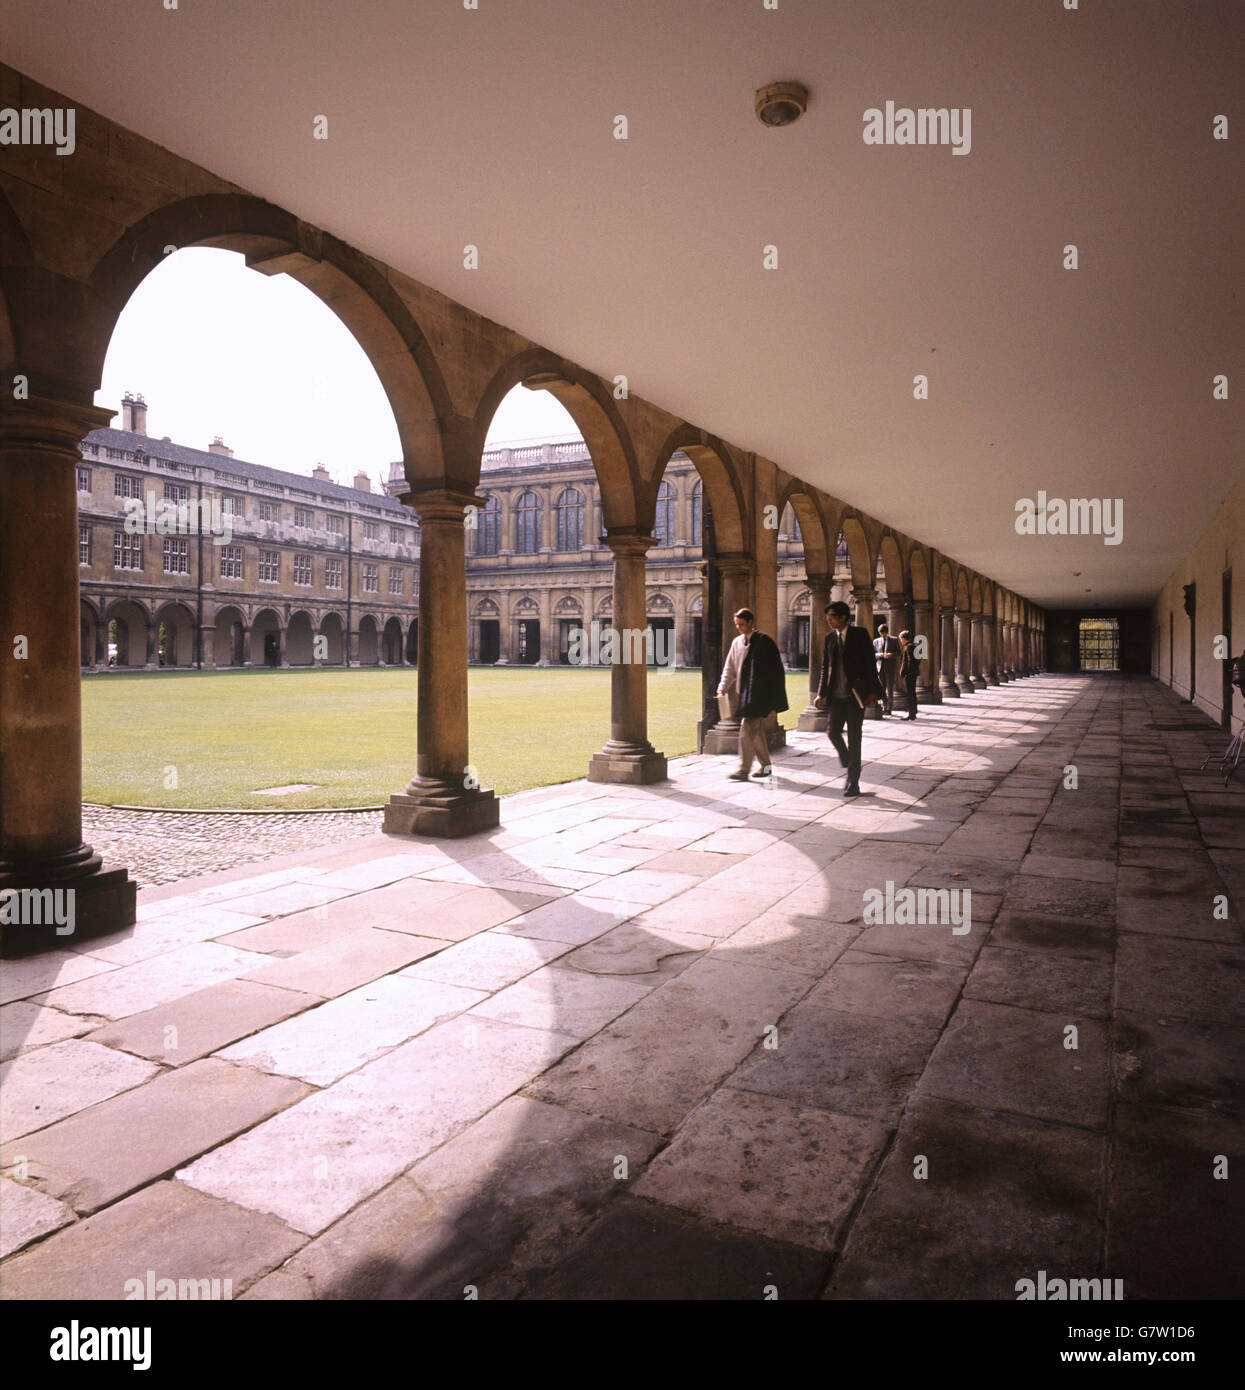 The Cloisters at Trinity College, Cambridge University. Stock Photo